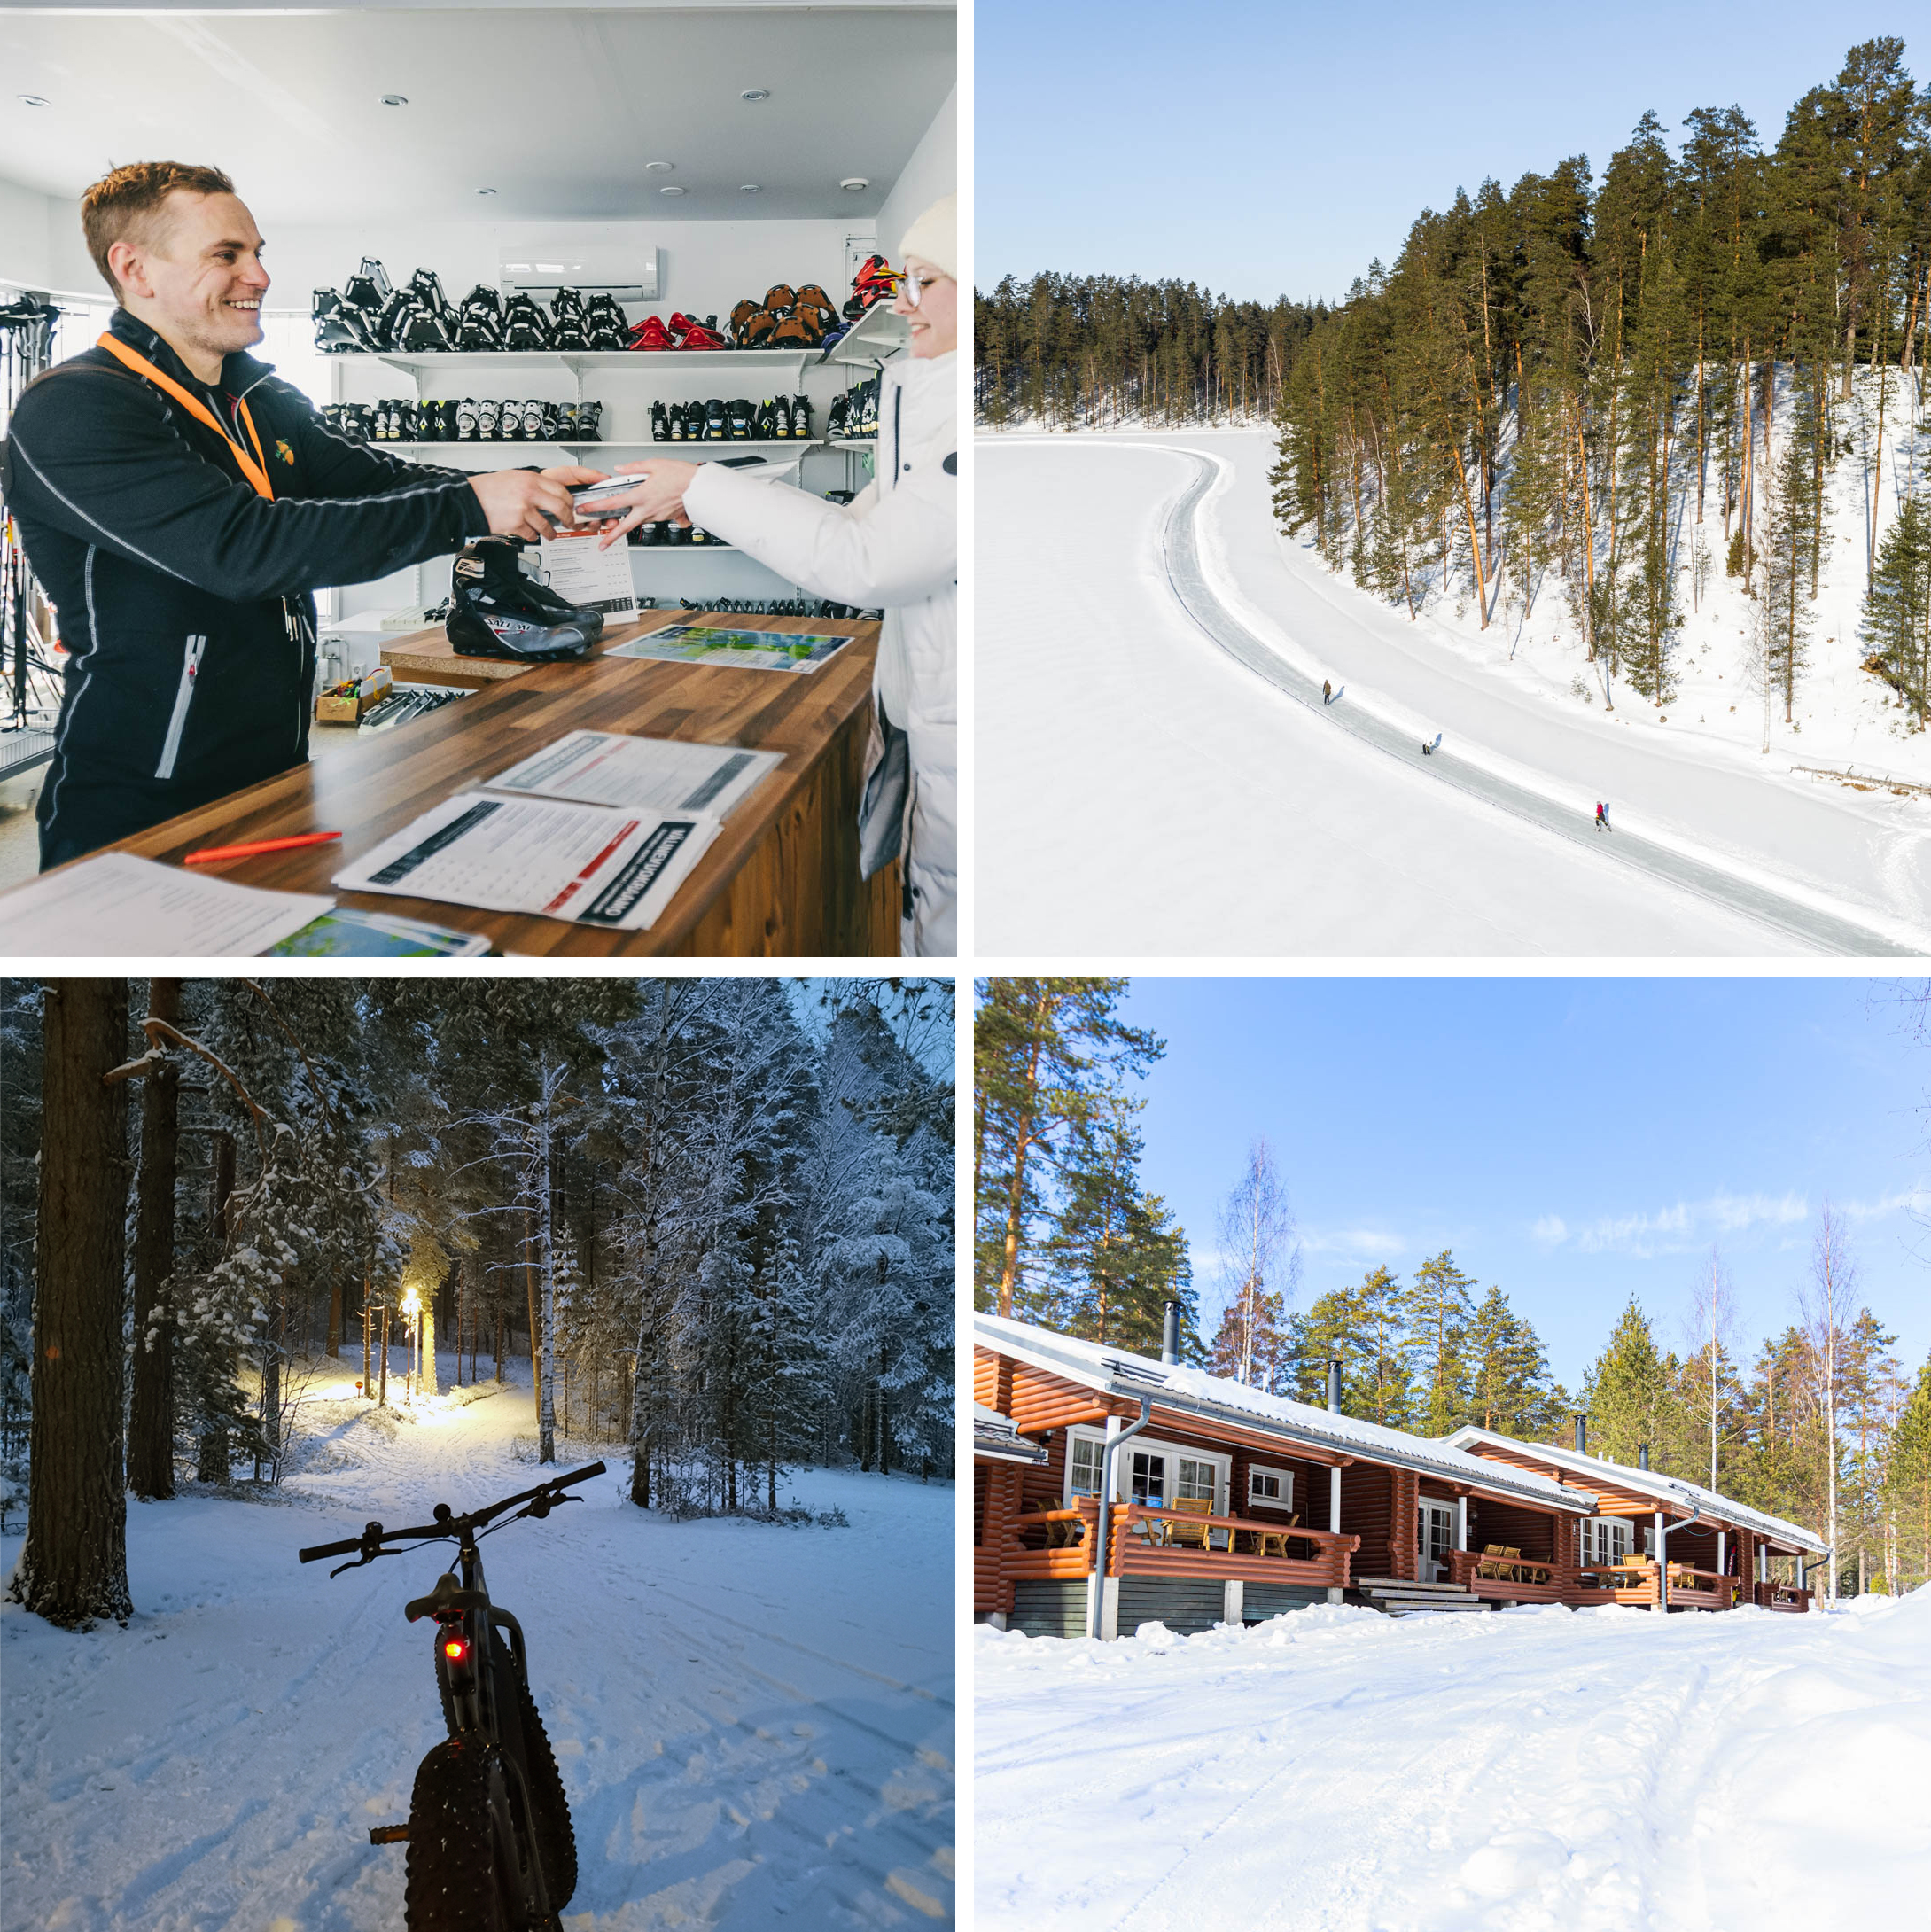 Winter activities and accommodation at harjun portti holiday resort in Punkaharju, Finland